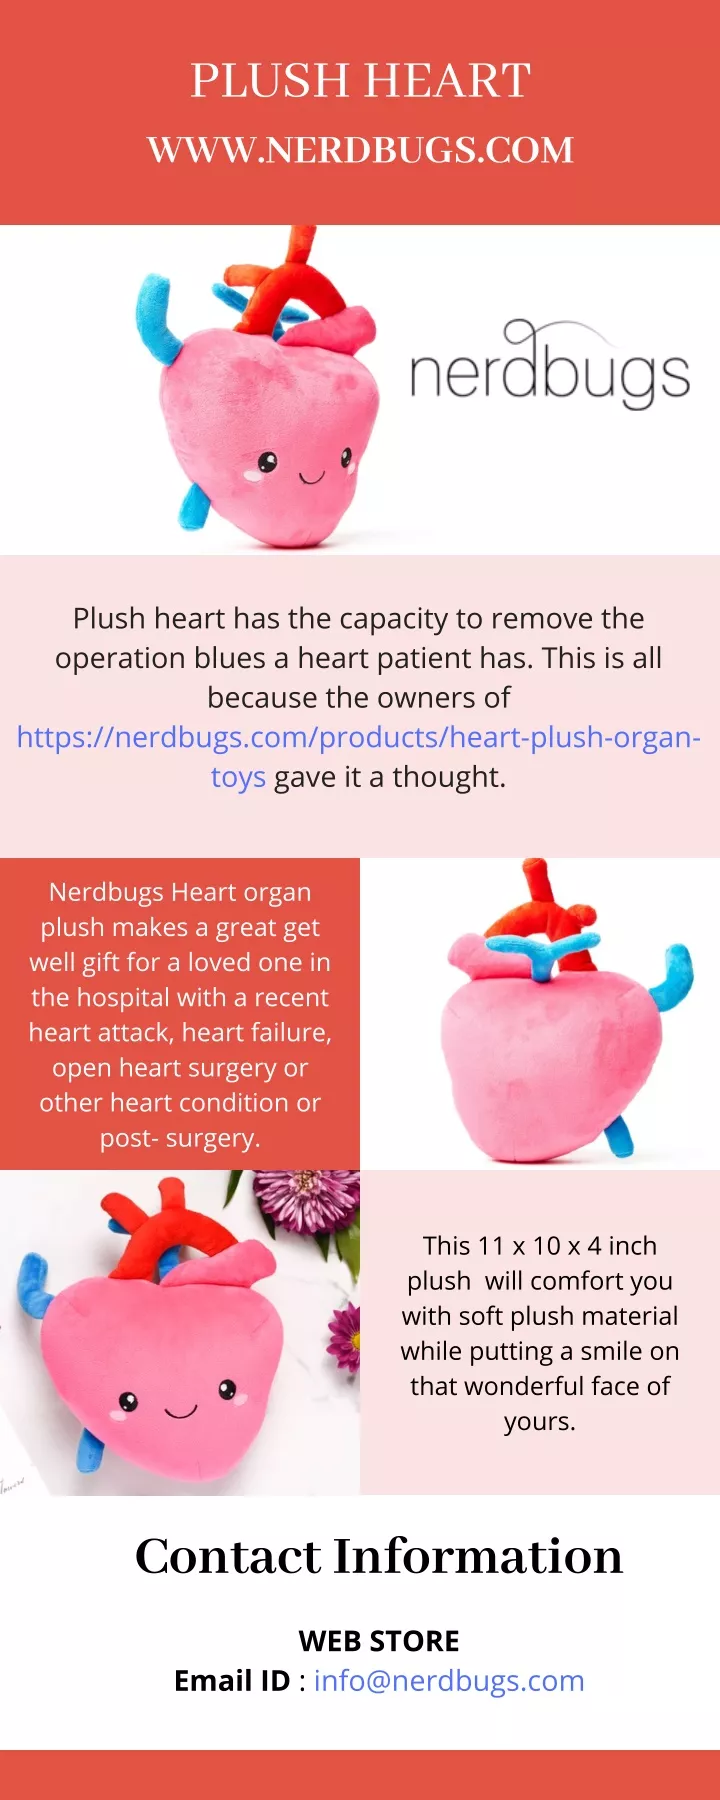 plush heart www nerdbugs com